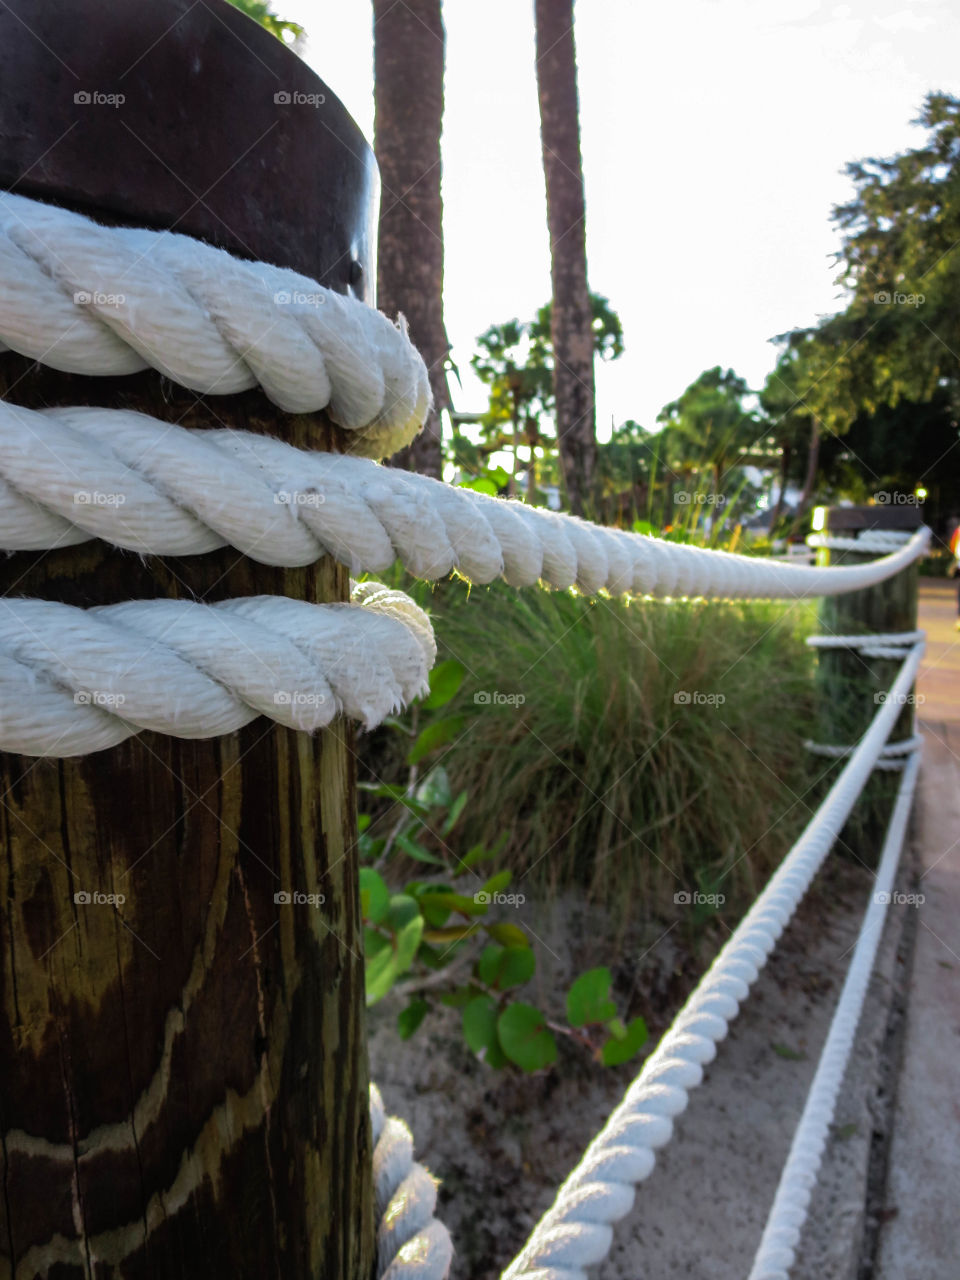 Path to Adventure. The boardwalk along the Yacht Club Resort at Disney World.